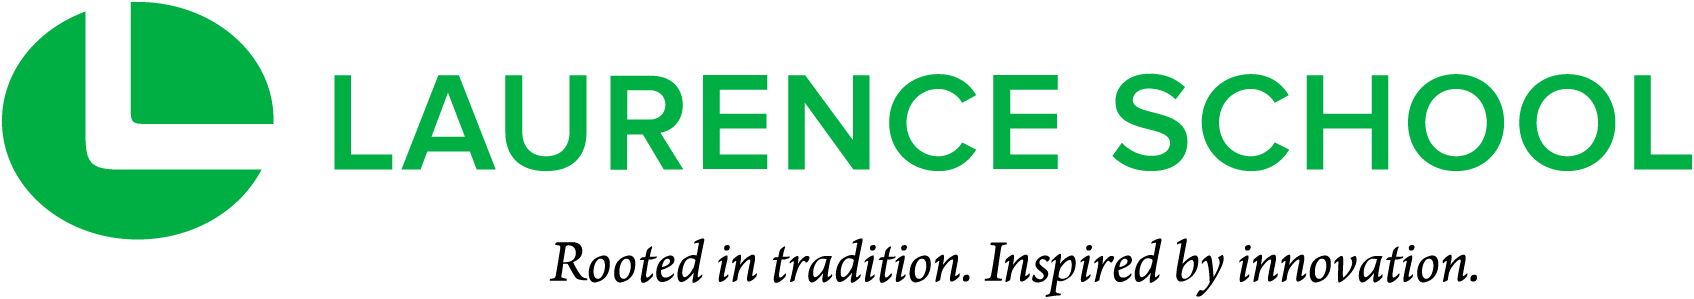 Laurence School logo